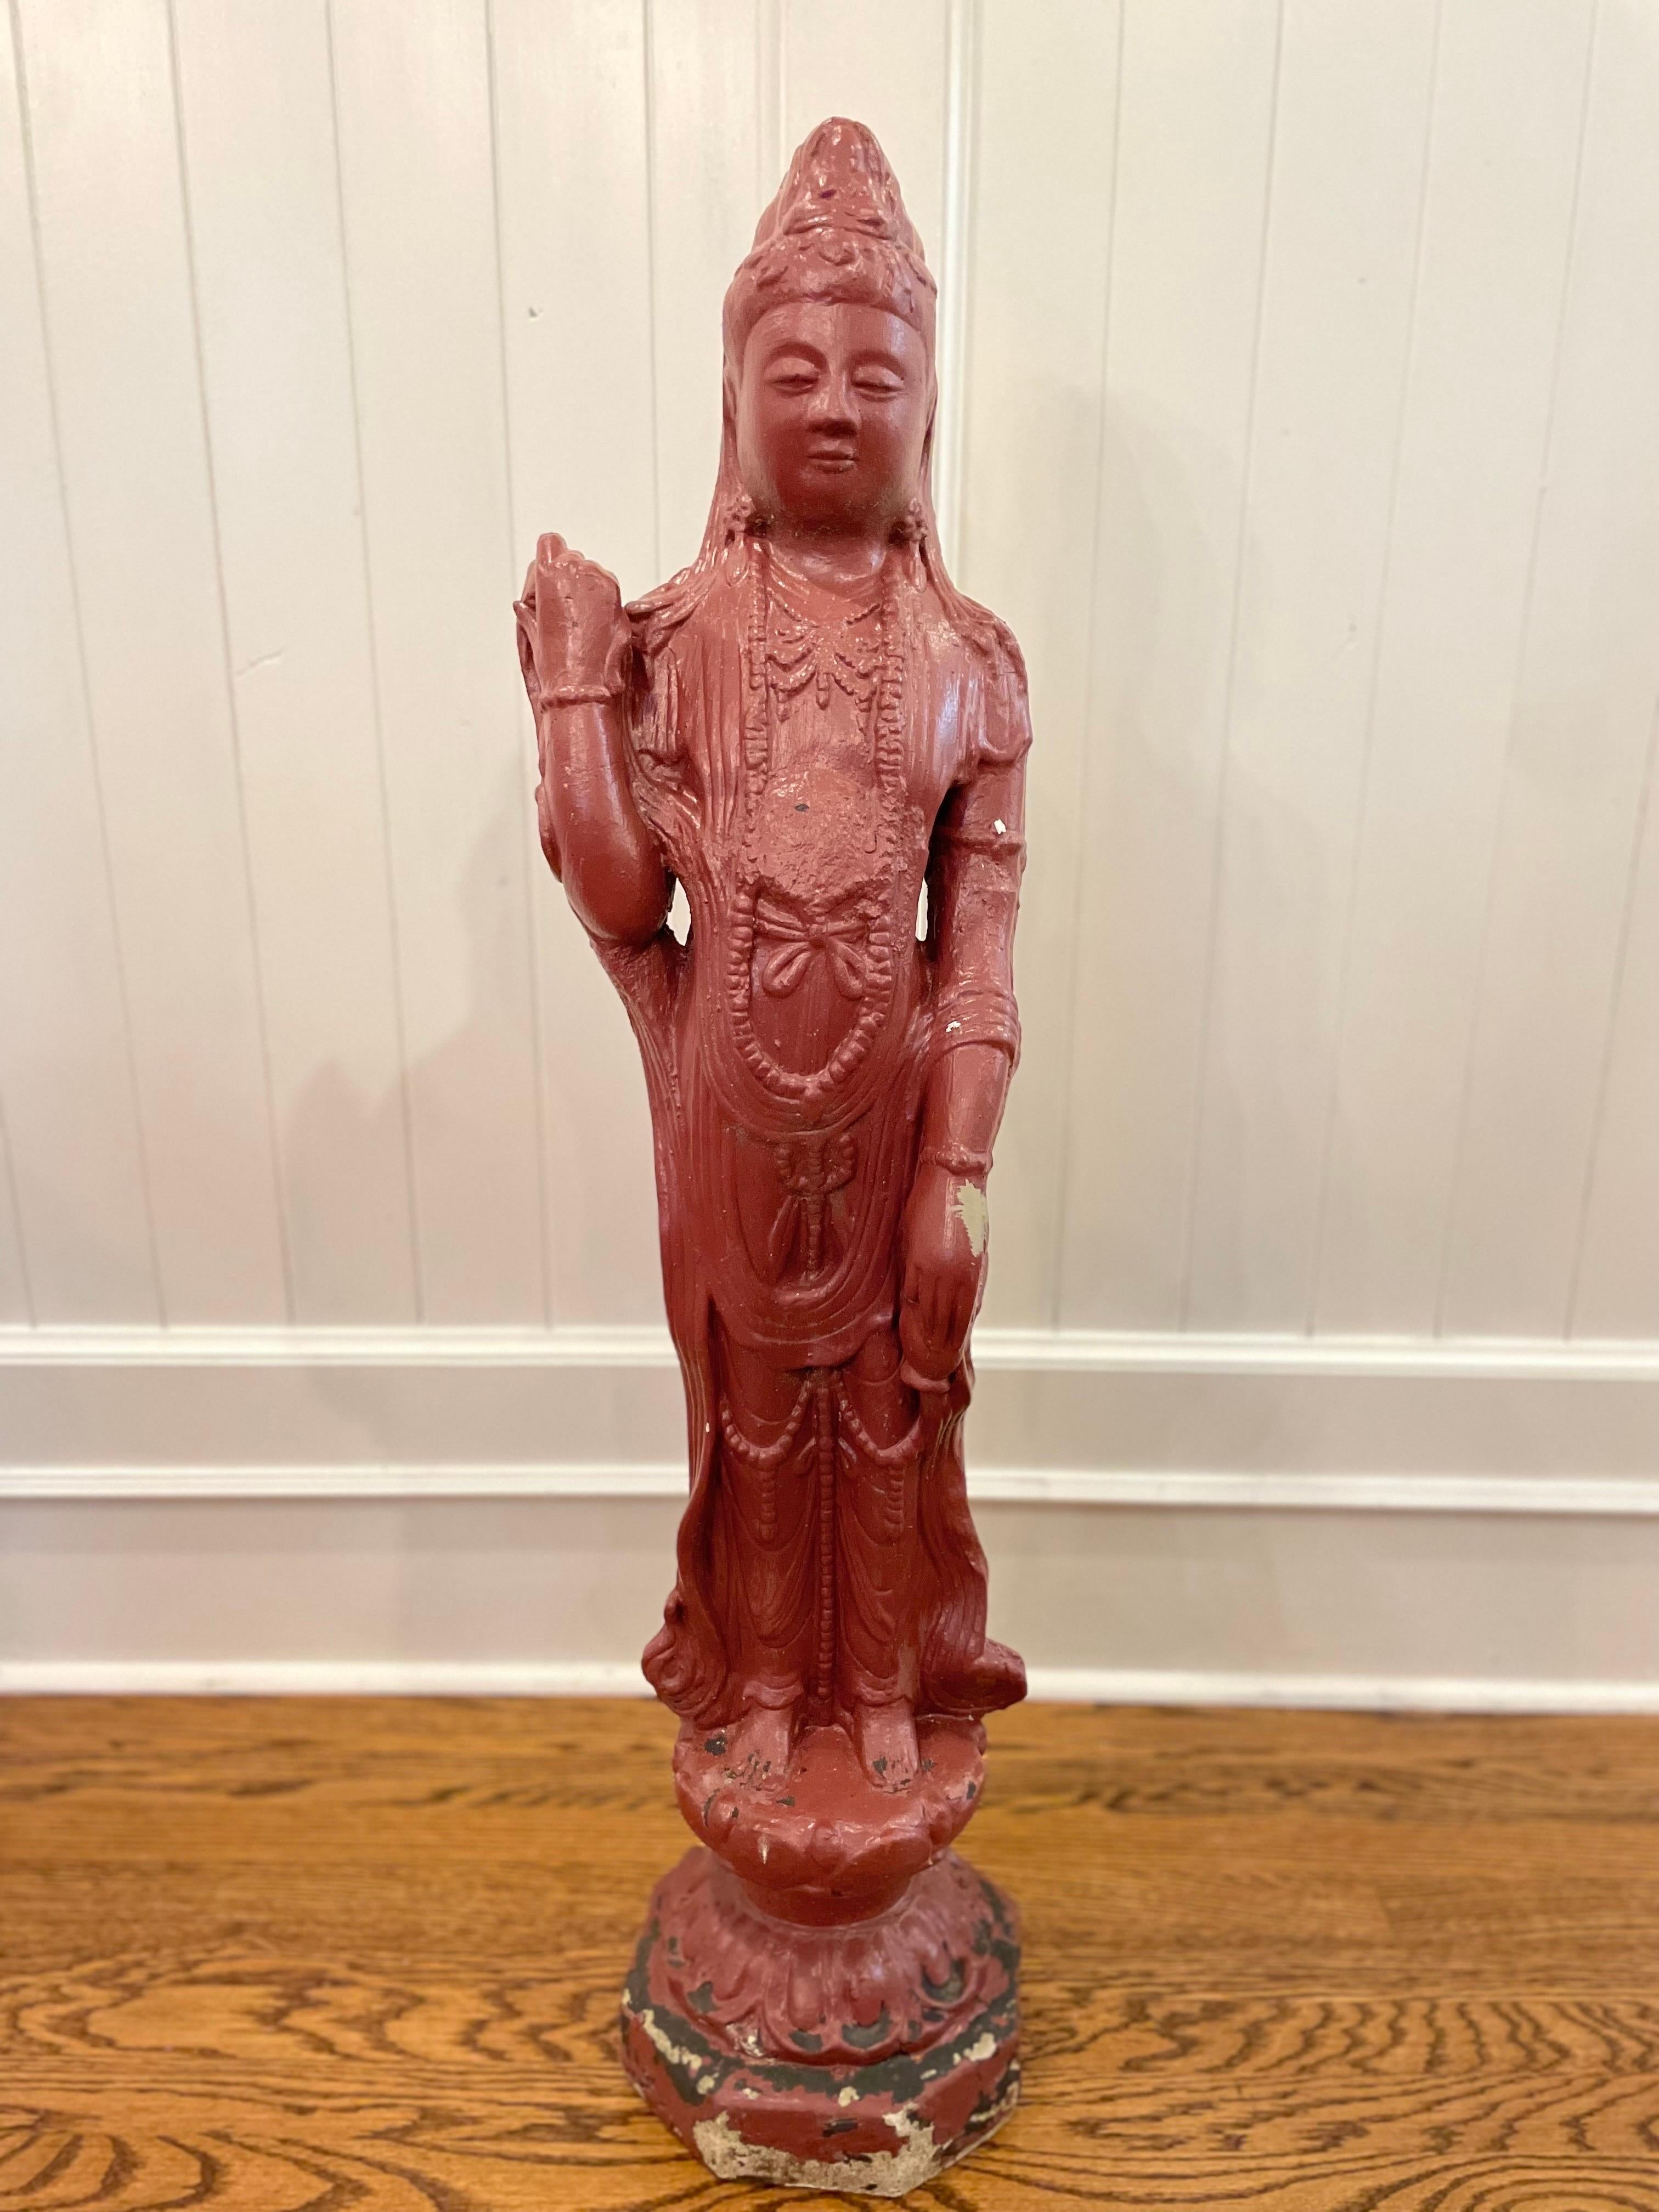 20th Century Garden Statue Kwan Guan Yin Asian Budda Goddess of Compassion, Mercy, and Love For Sale